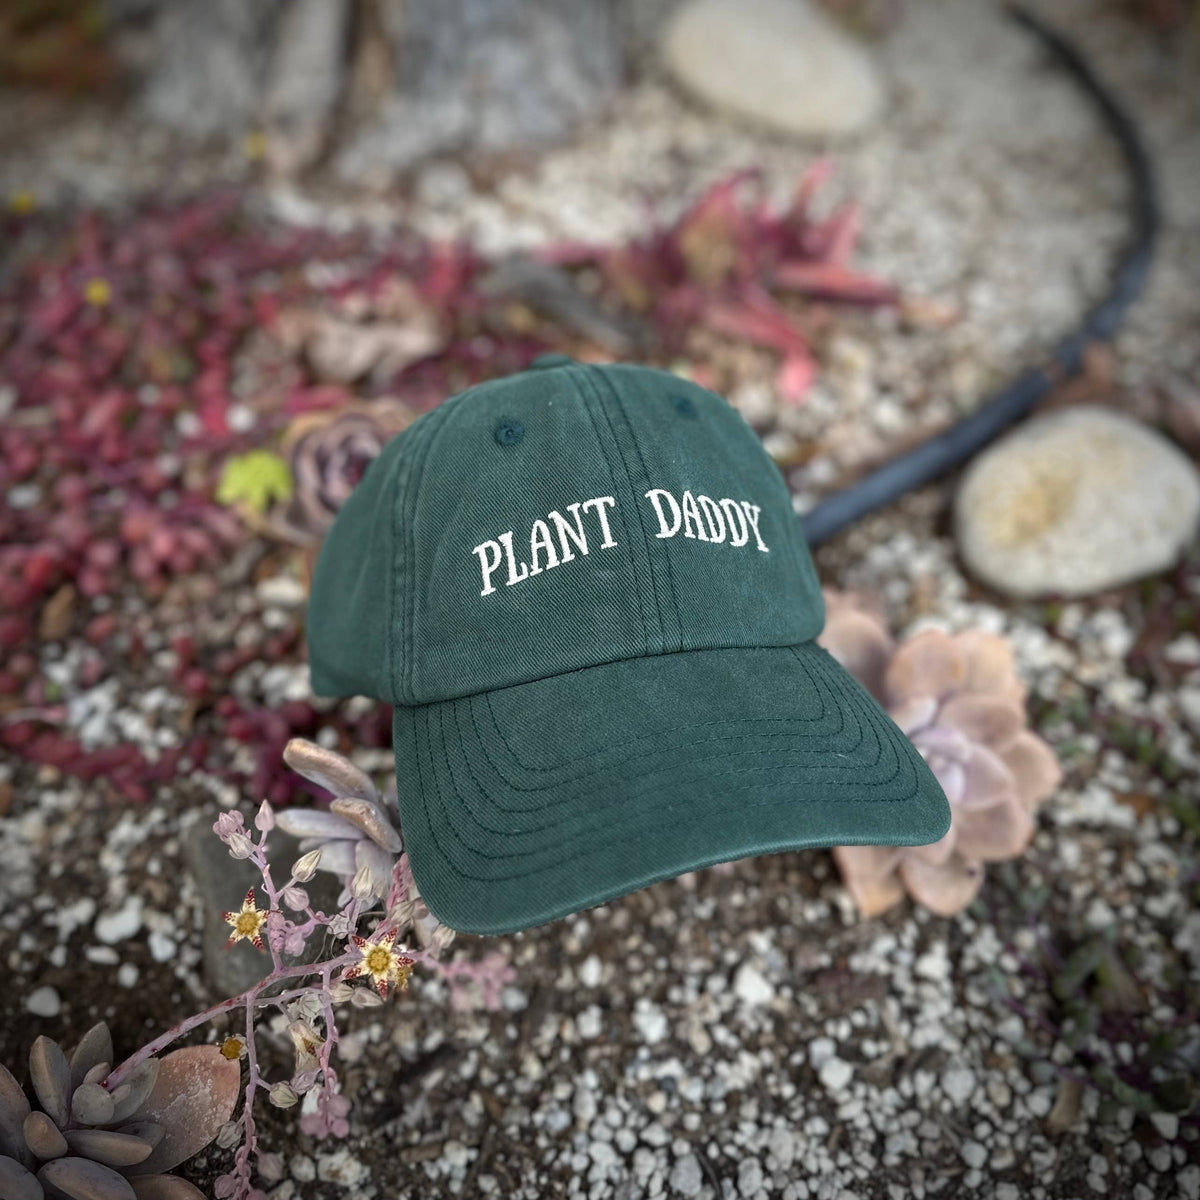 Plant Daddy Hat